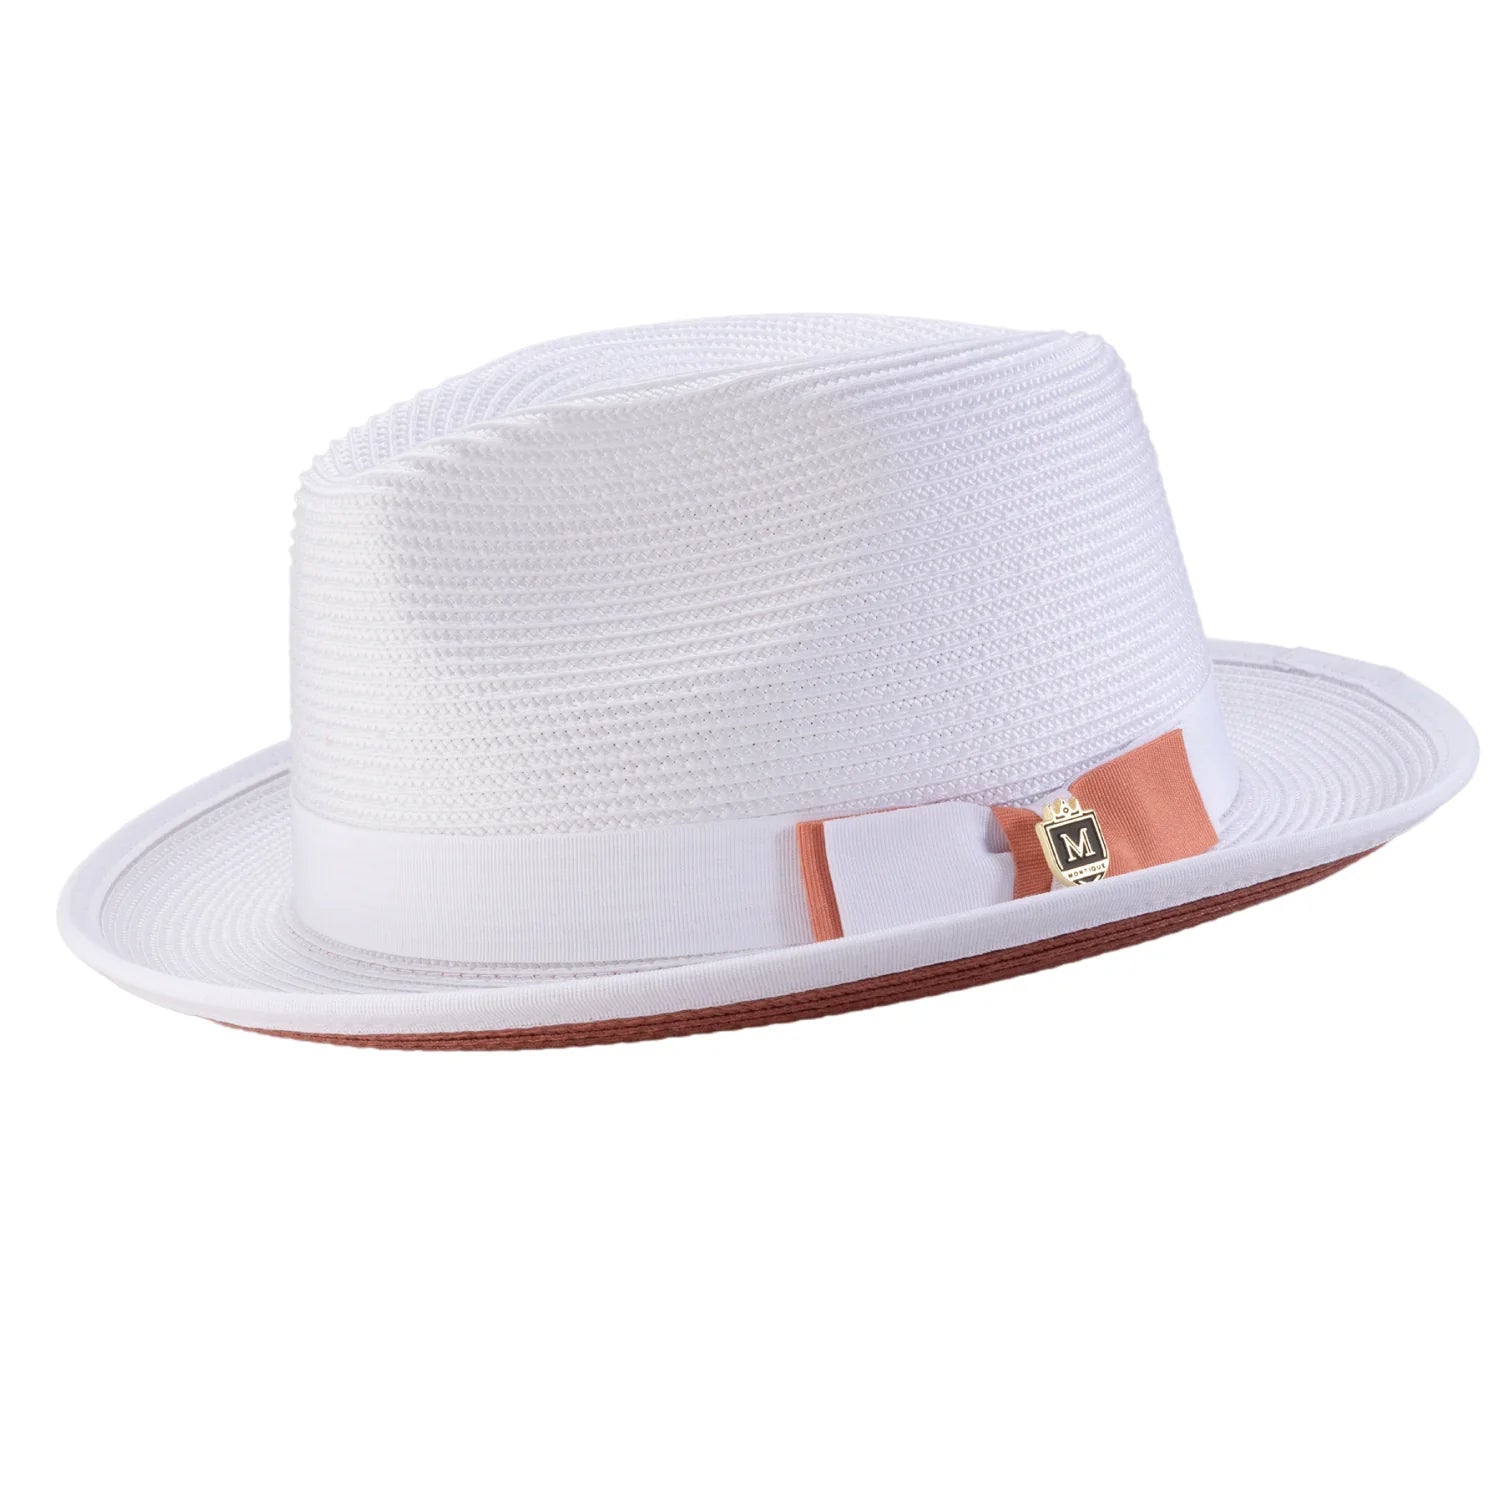 Braided Stingy Brim Pinch Fedora Hat - White with Papaya Bottom